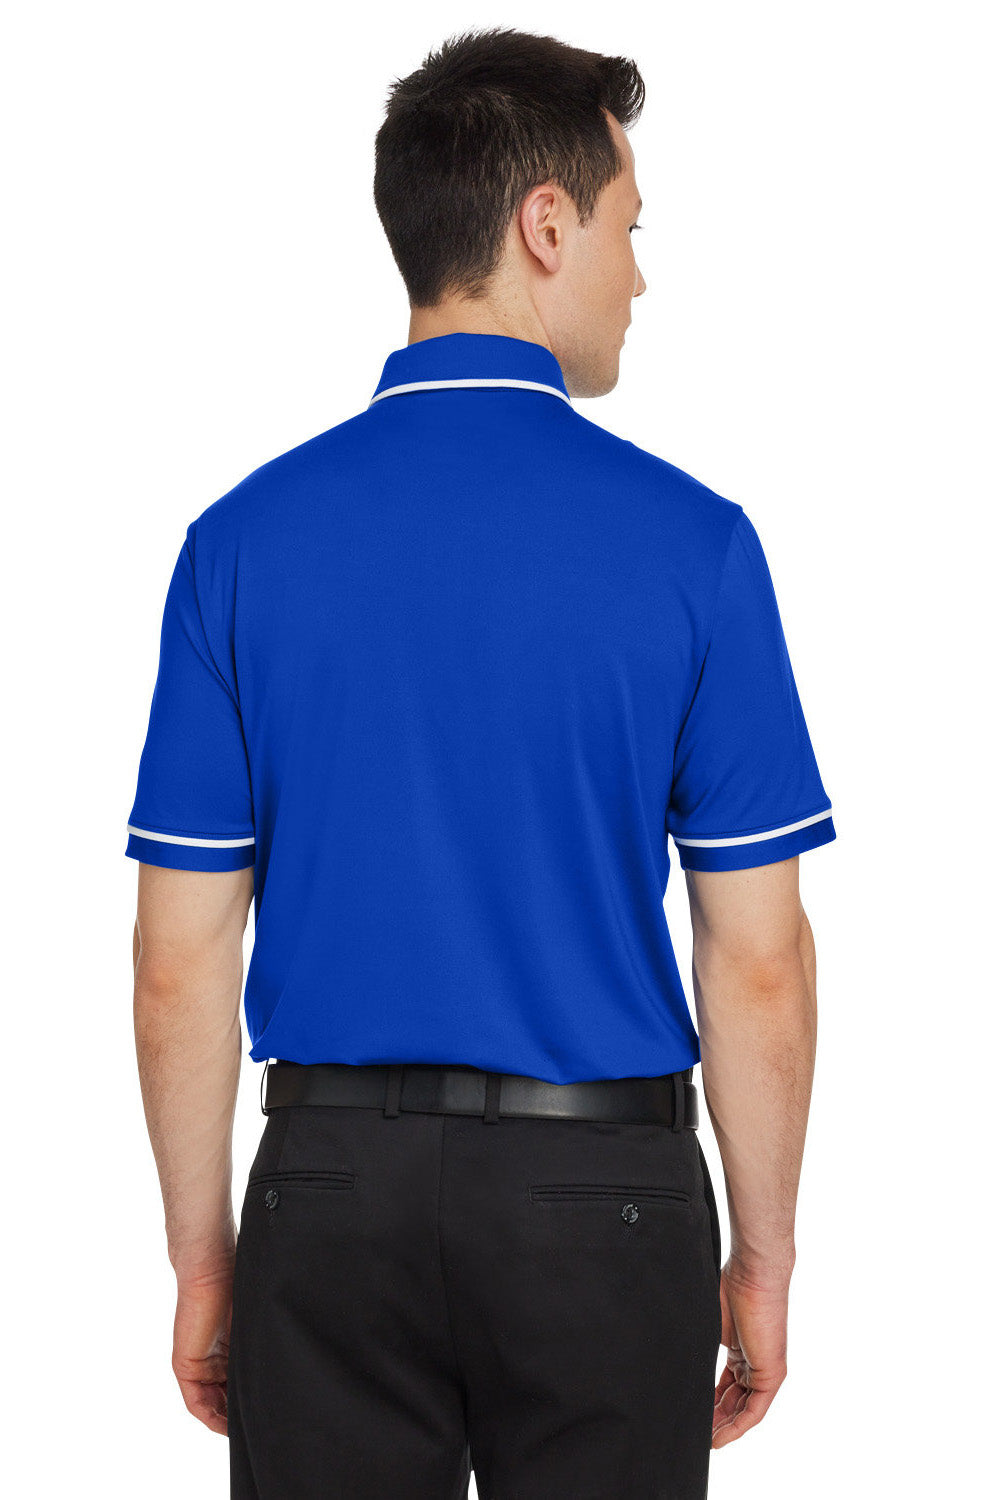 Under Armour 1376904 Mens Teams Performance Moisture Wicking Short Sleeve Polo Shirt Royal Blue Model Back